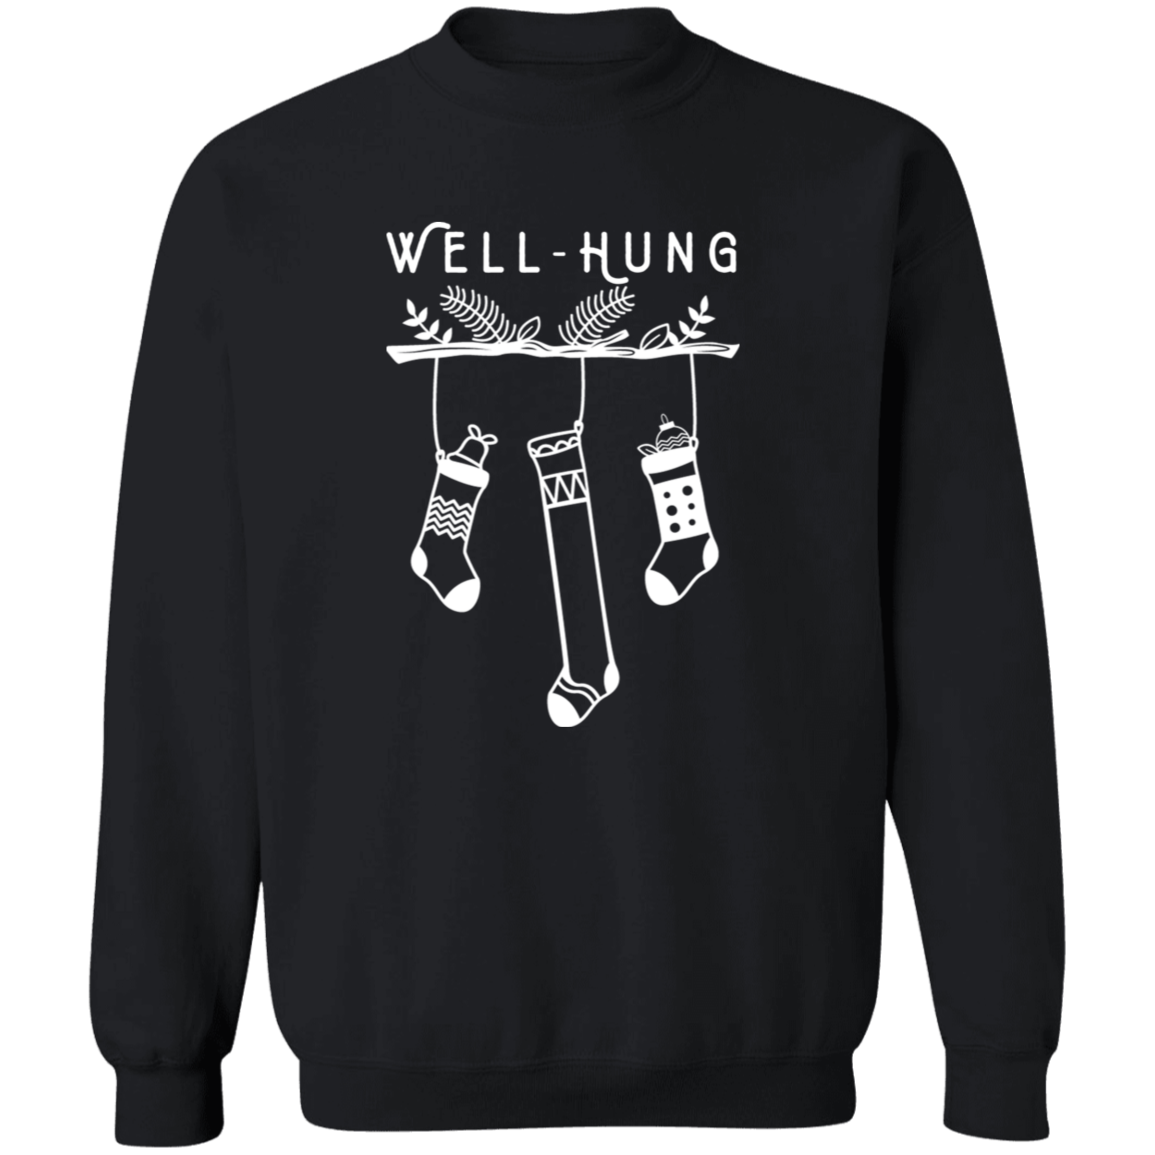 Well Hung G180 Crewneck Pullover Sweatshirt